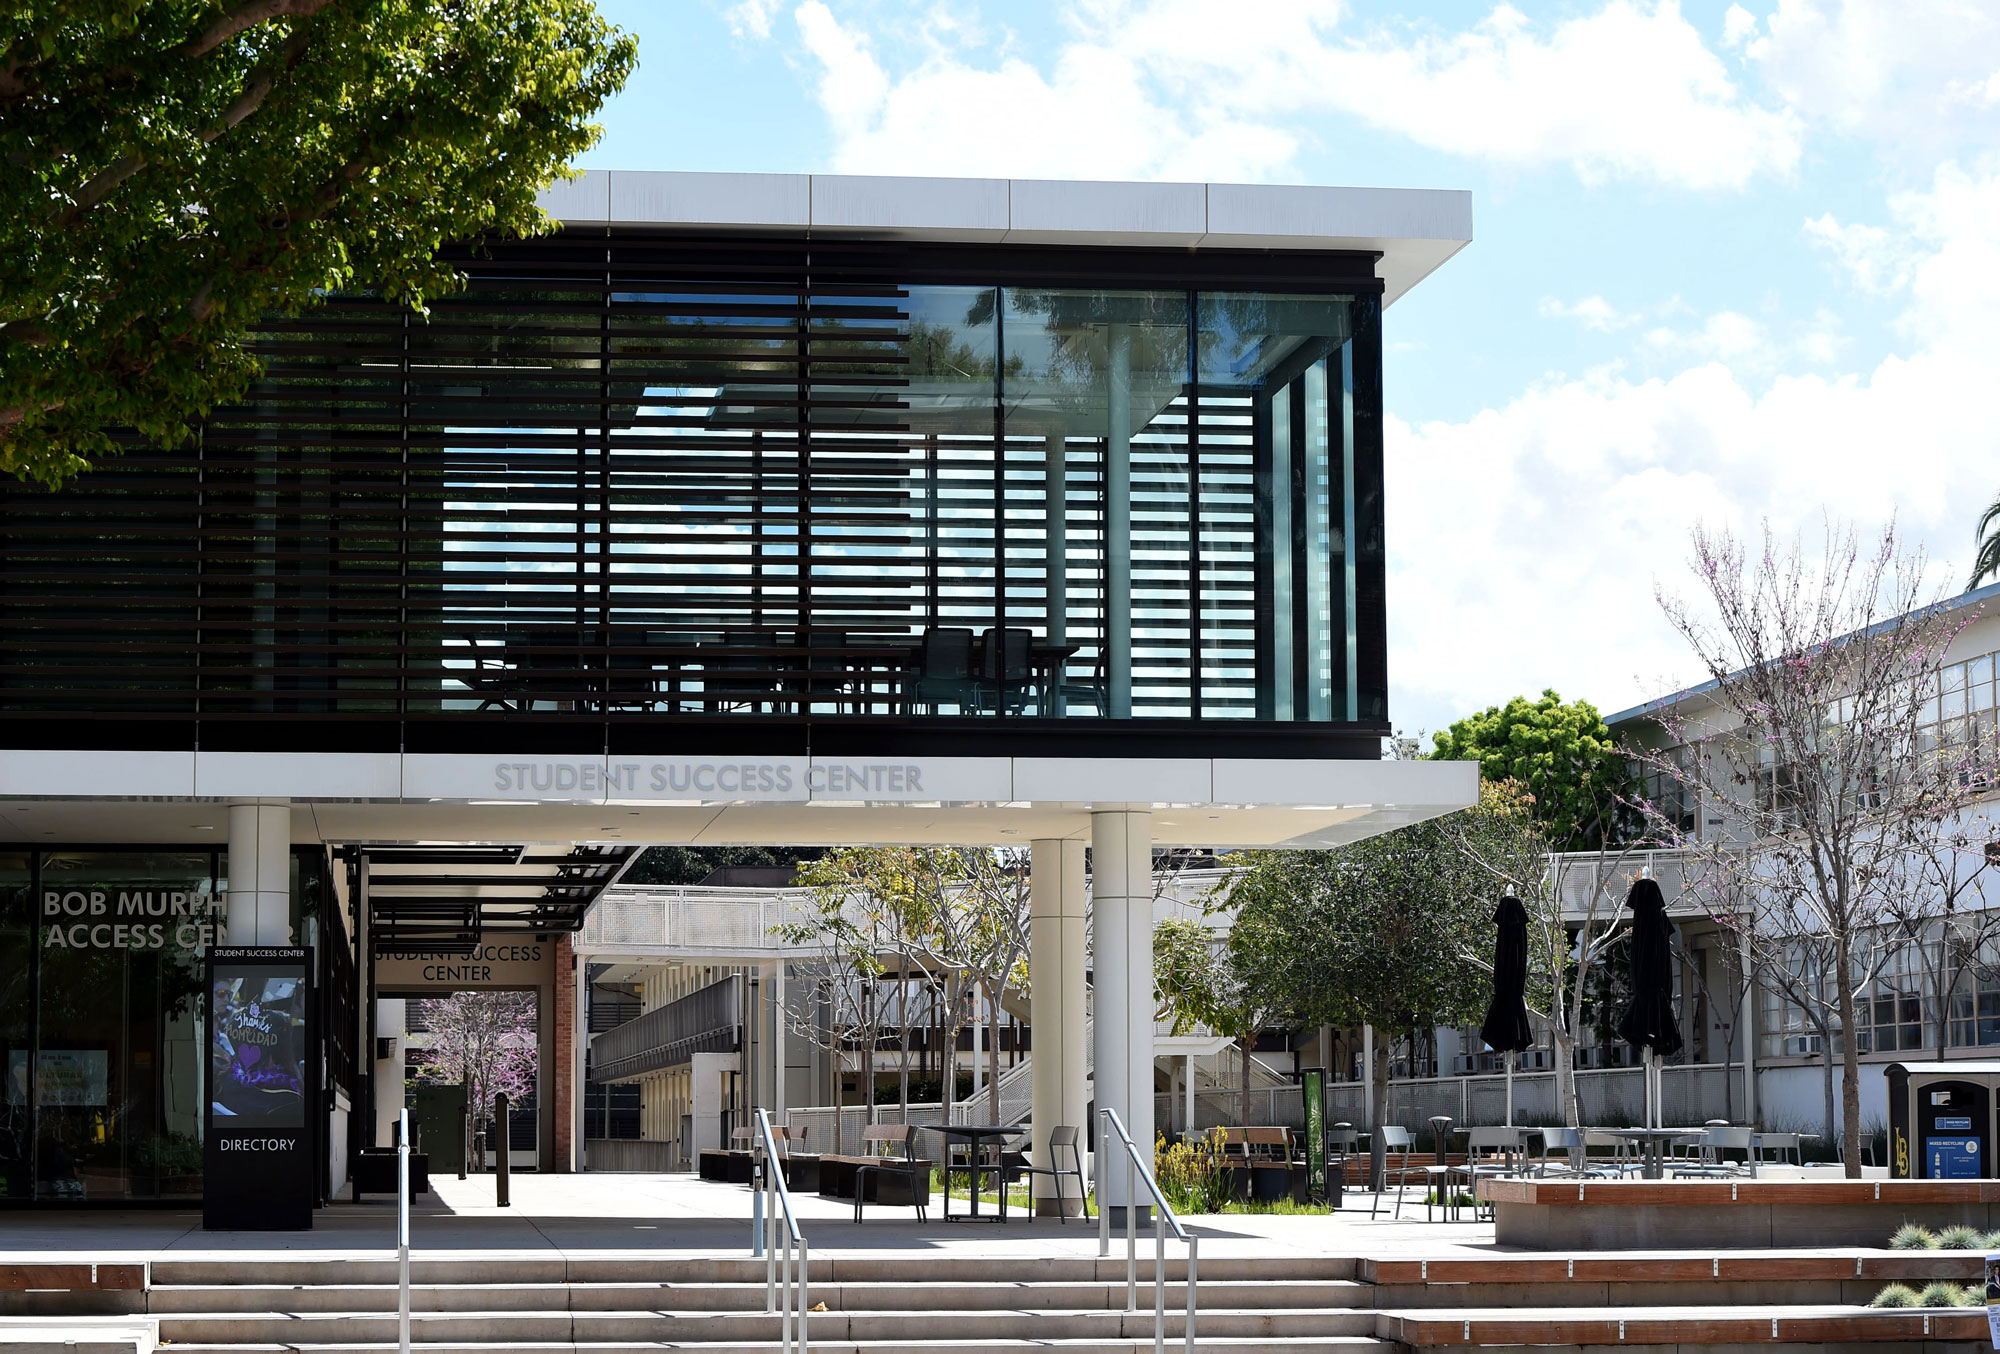 California State University of Long Beach sits empty on March 17 in Long Beach, California.